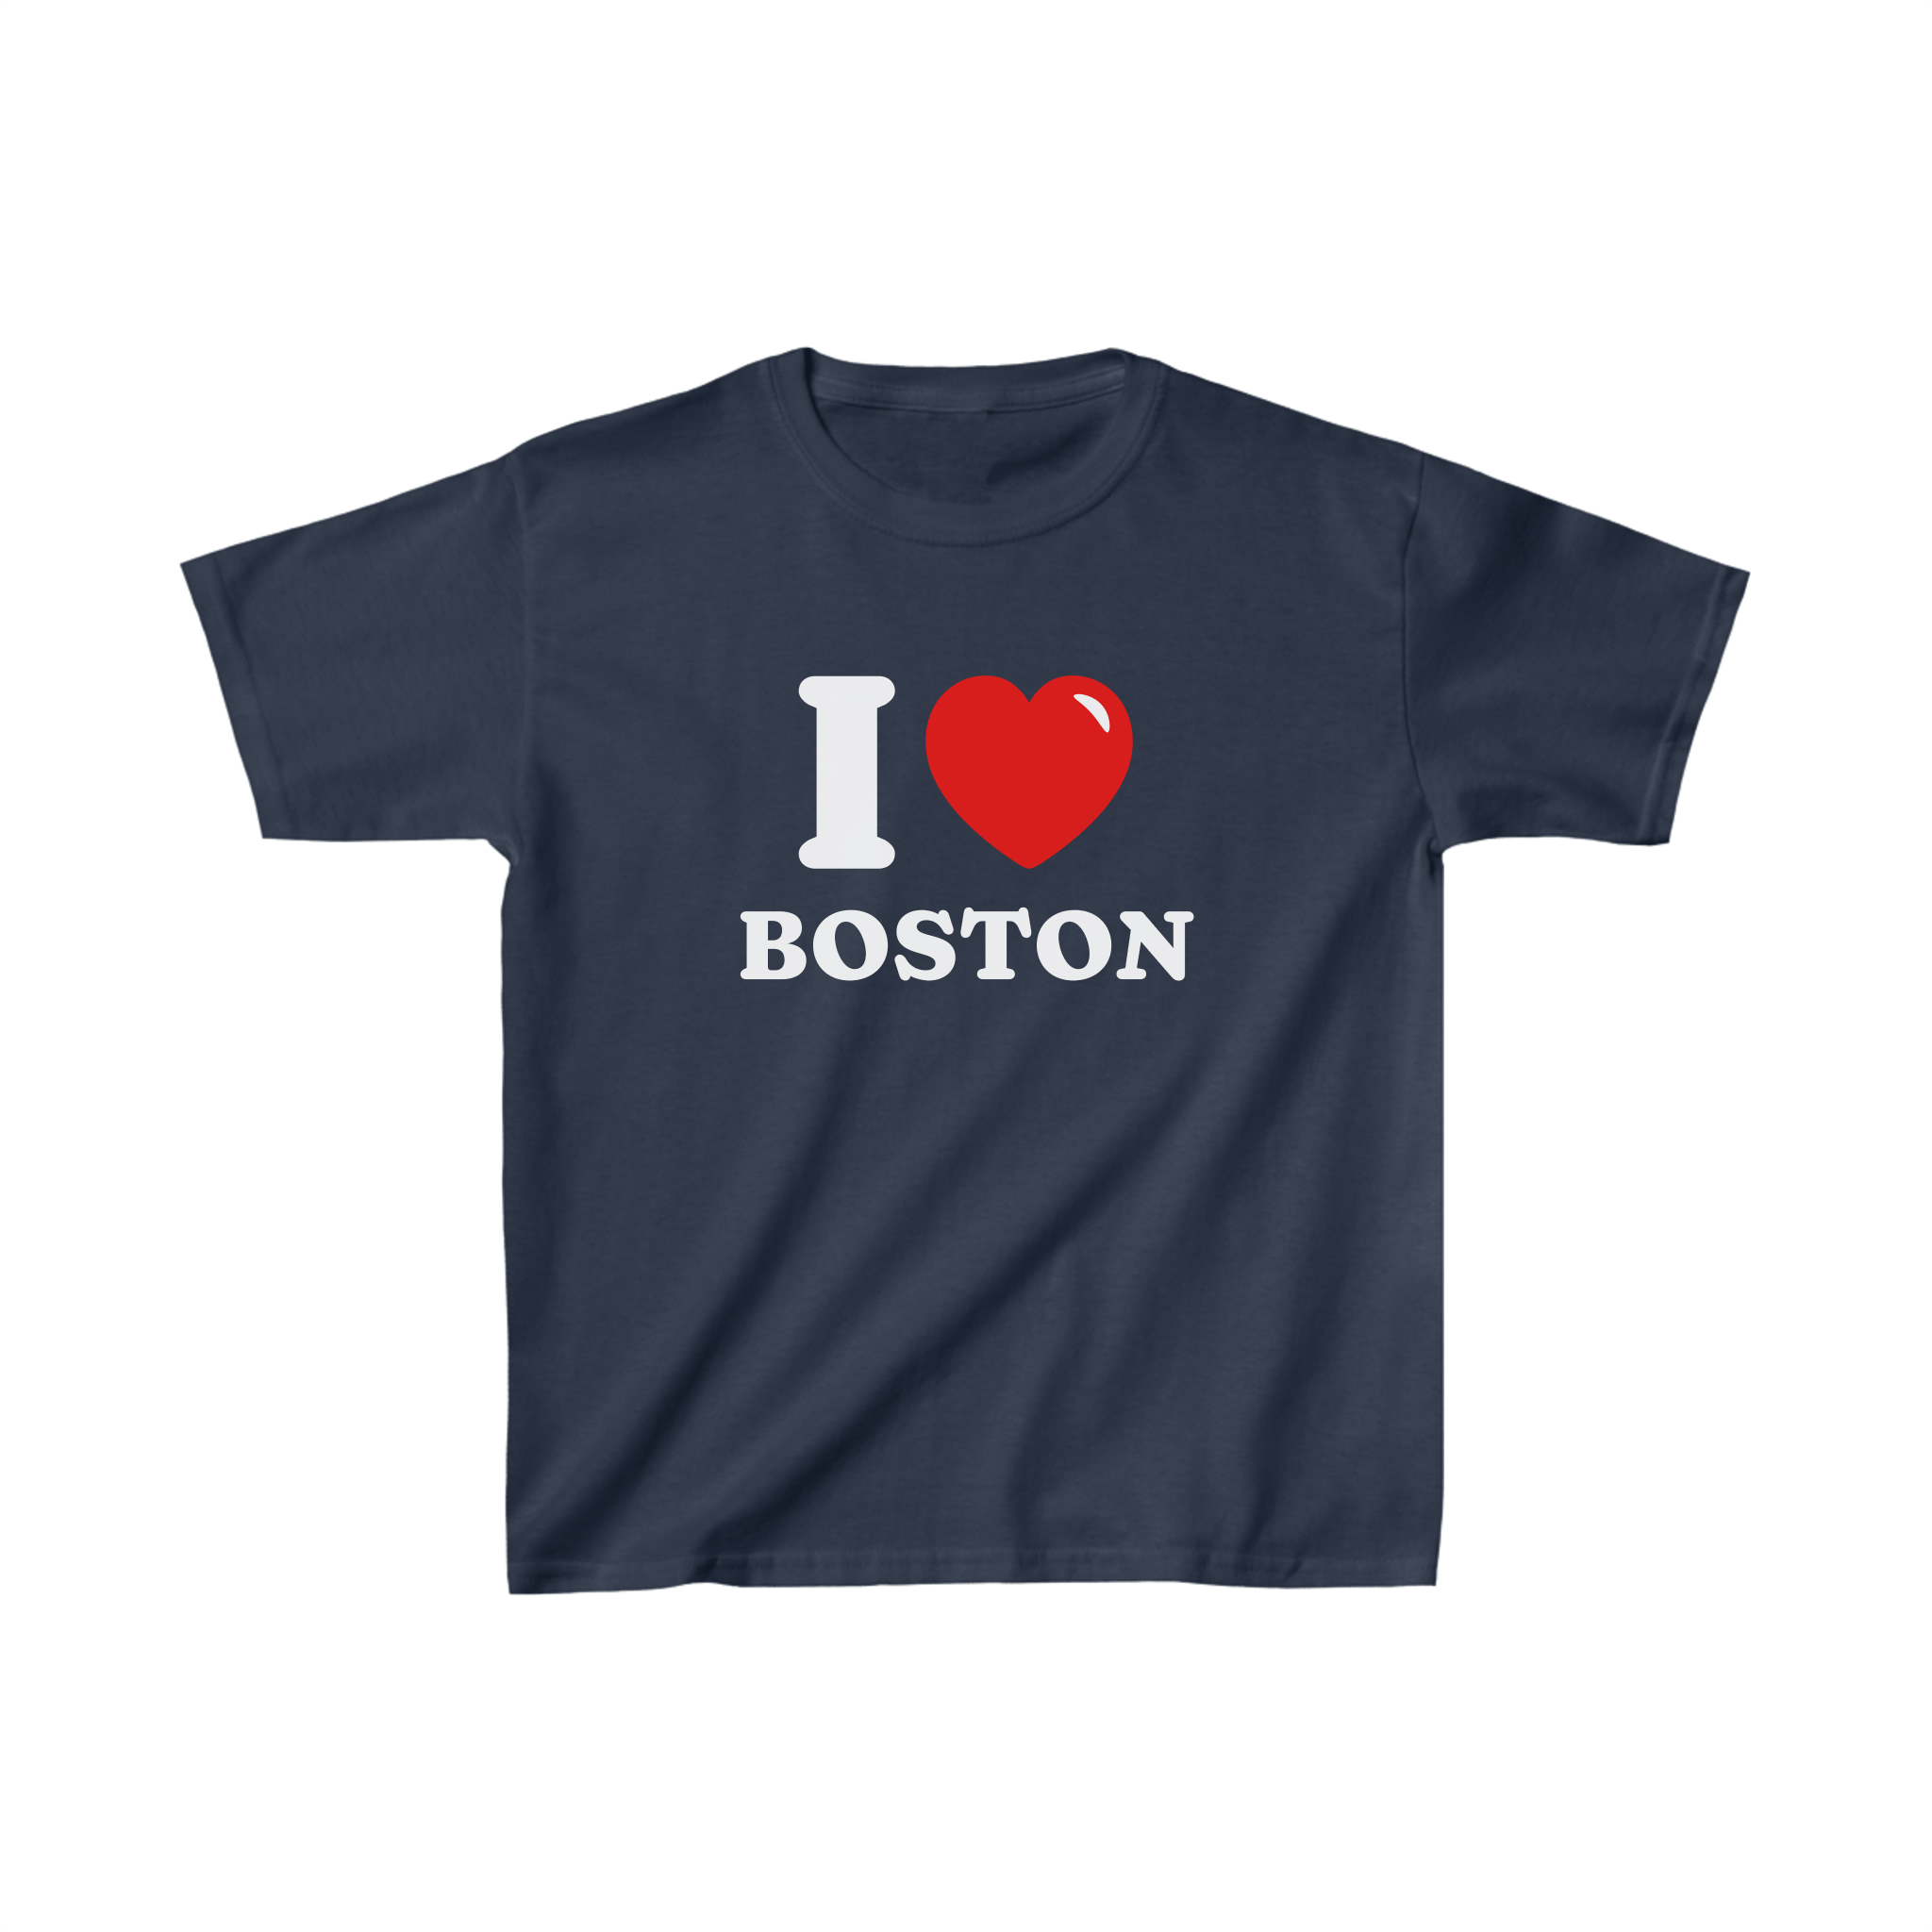 'I love Boston' baby tee - In Print We Trust